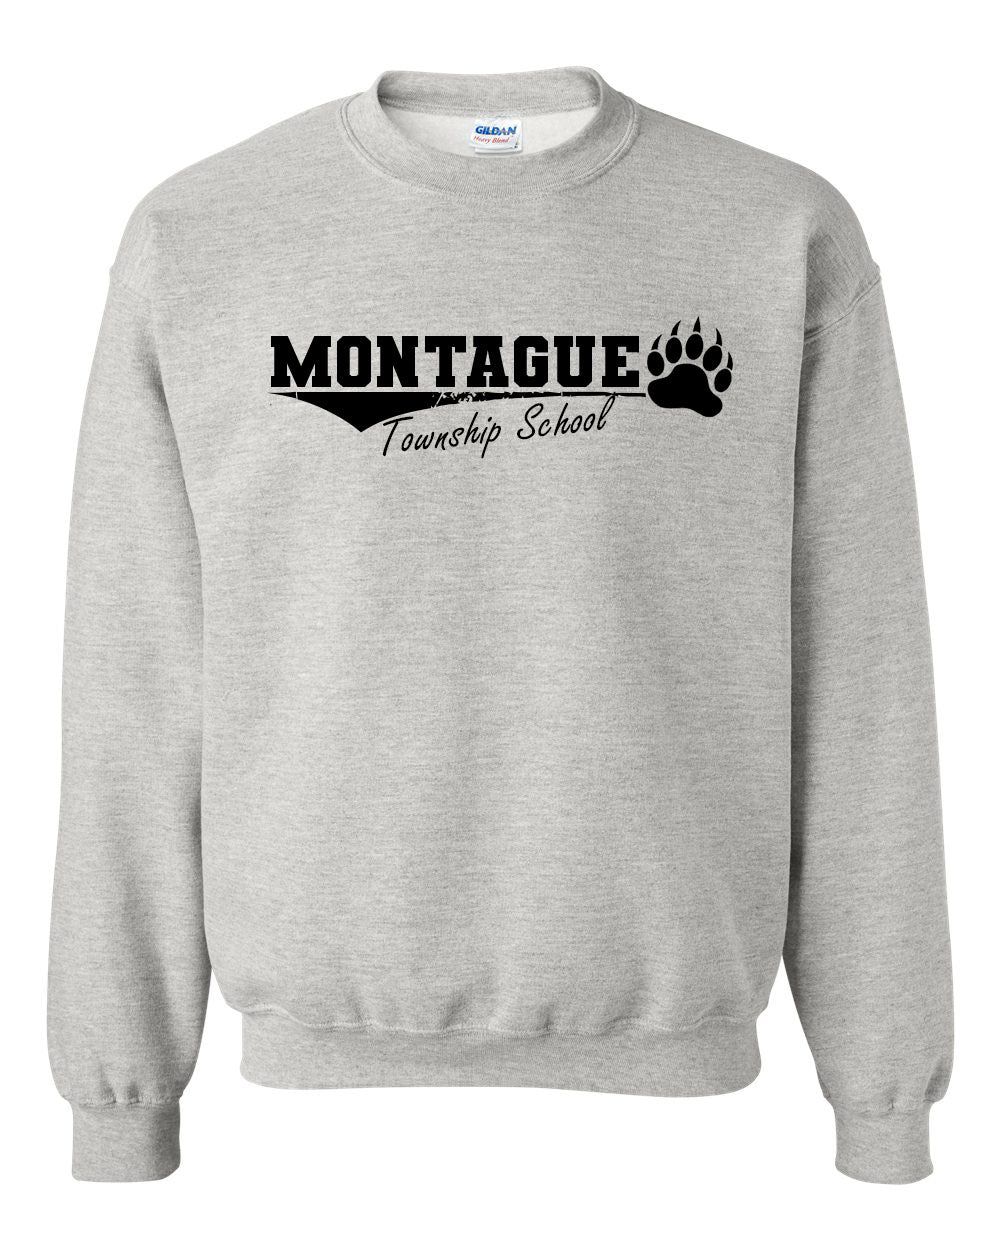 Montague Design 1 non hooded sweatshirt